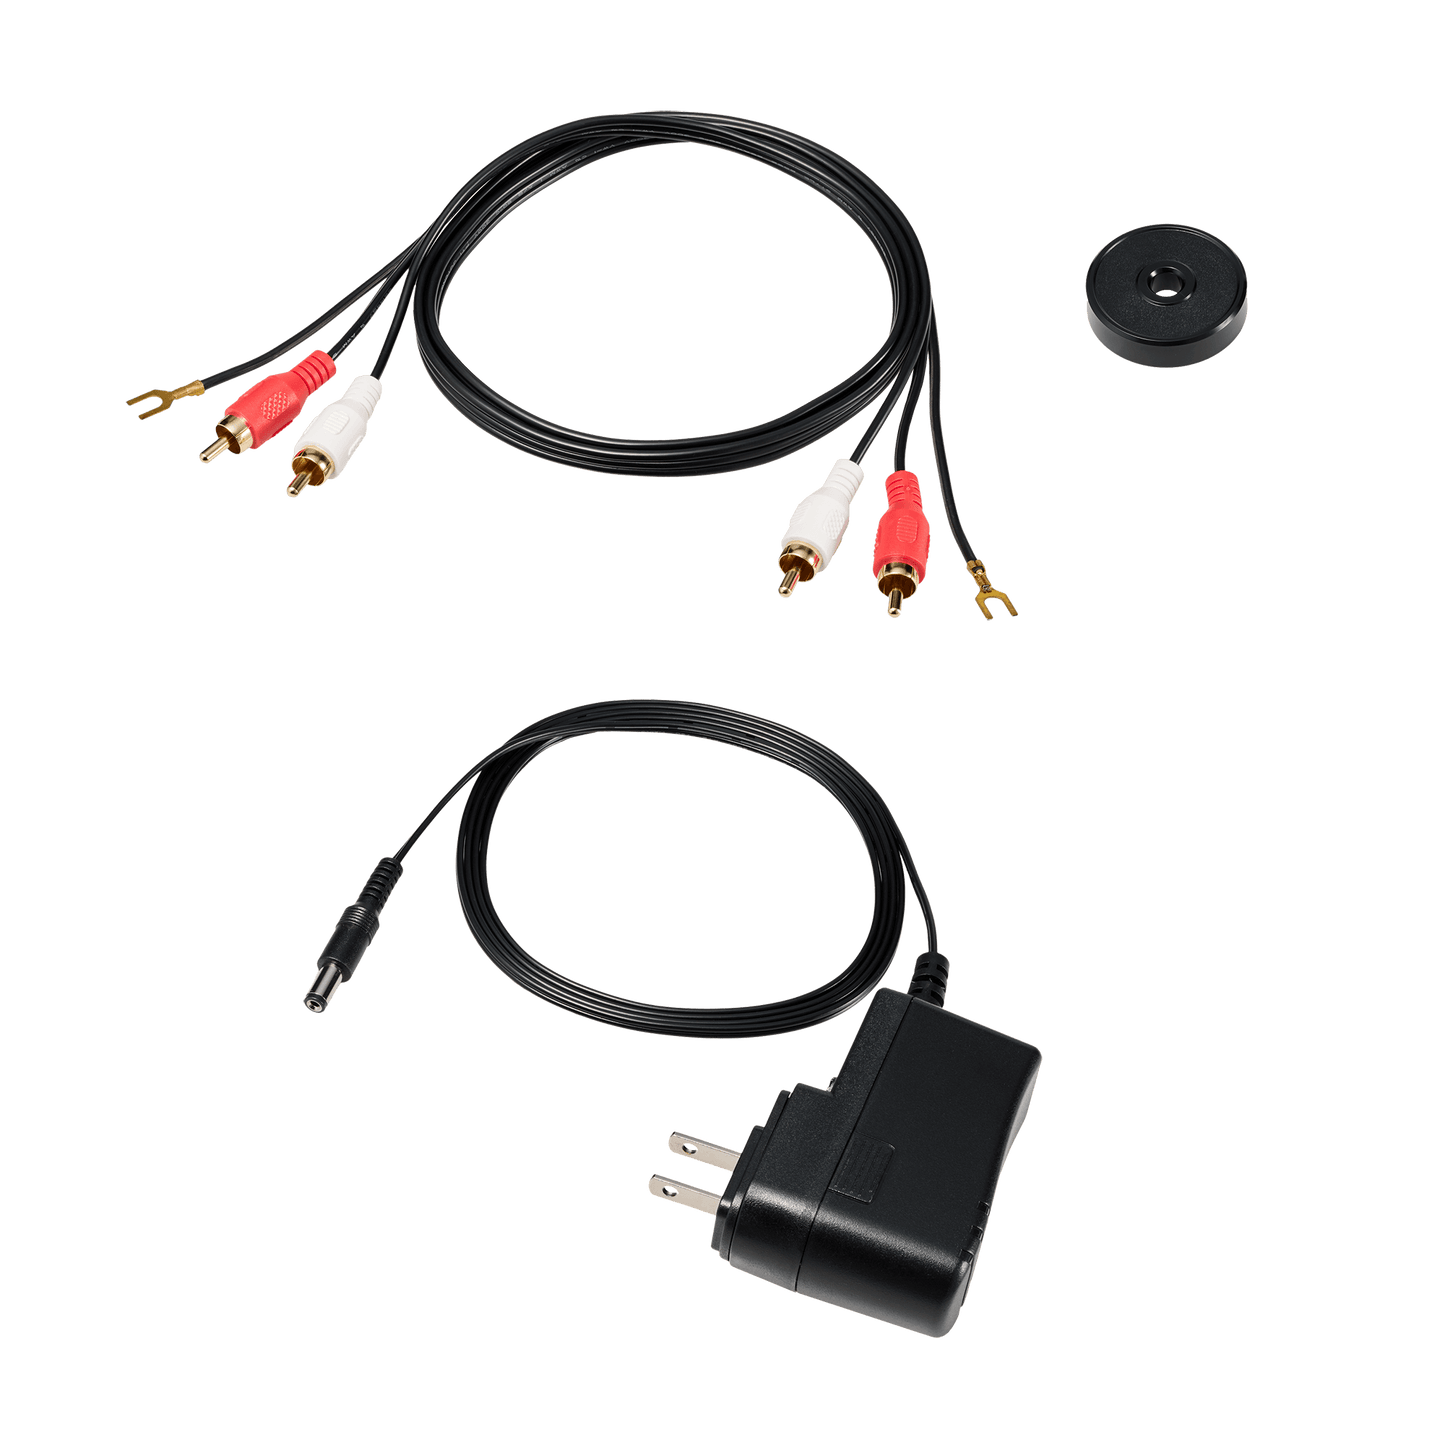 Audio Technica - AT-LPW50BT Manual Belt-Drive Turntable (Wireless & Analog)